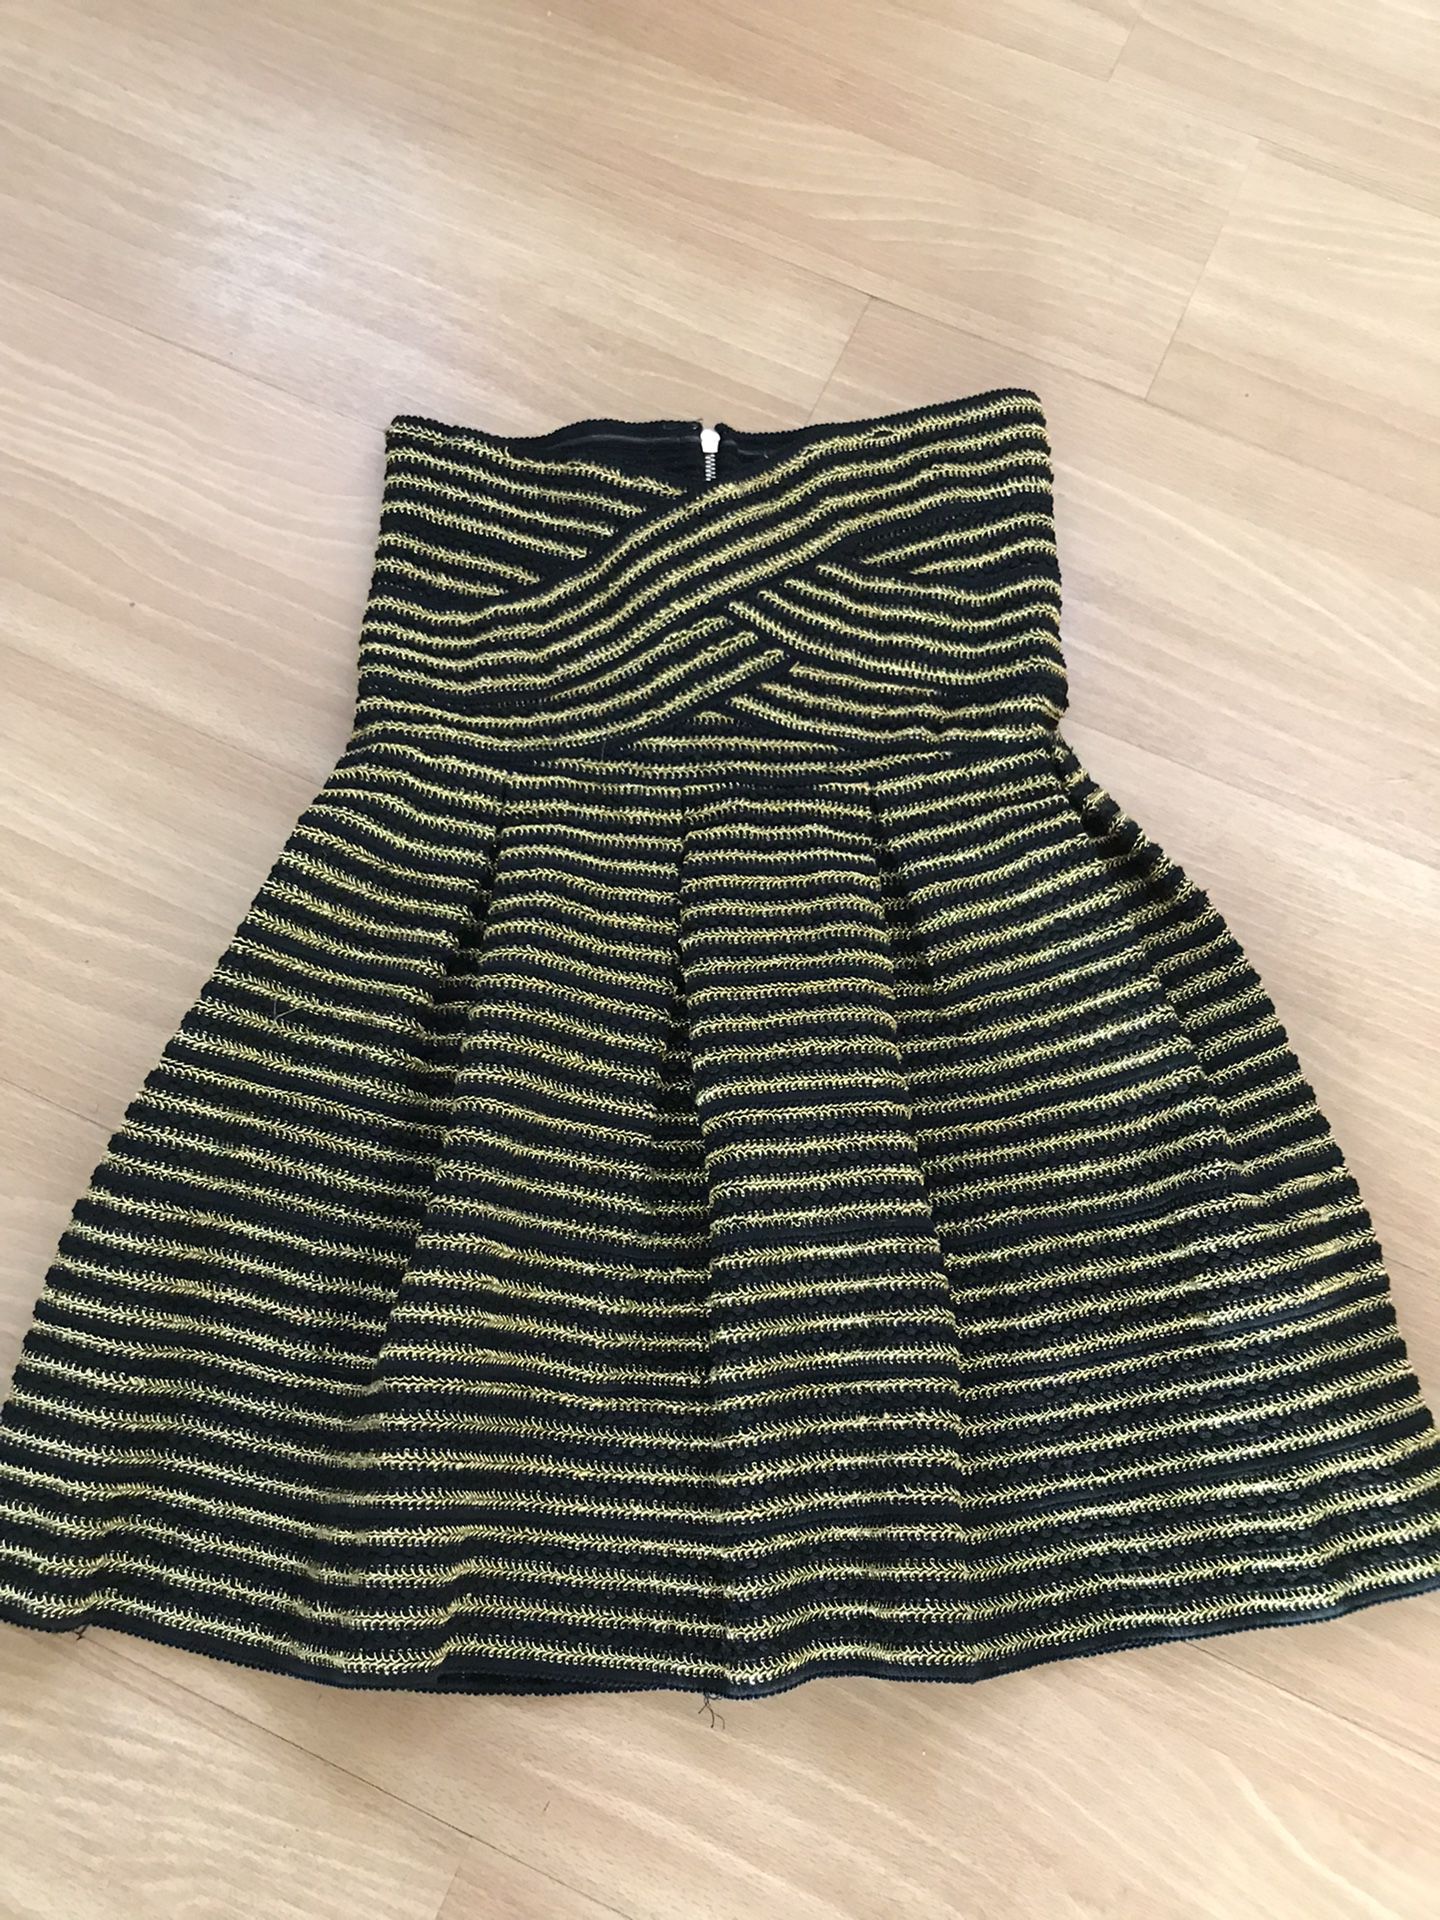 Black And Gold Short Strapless Dress -Size Medium